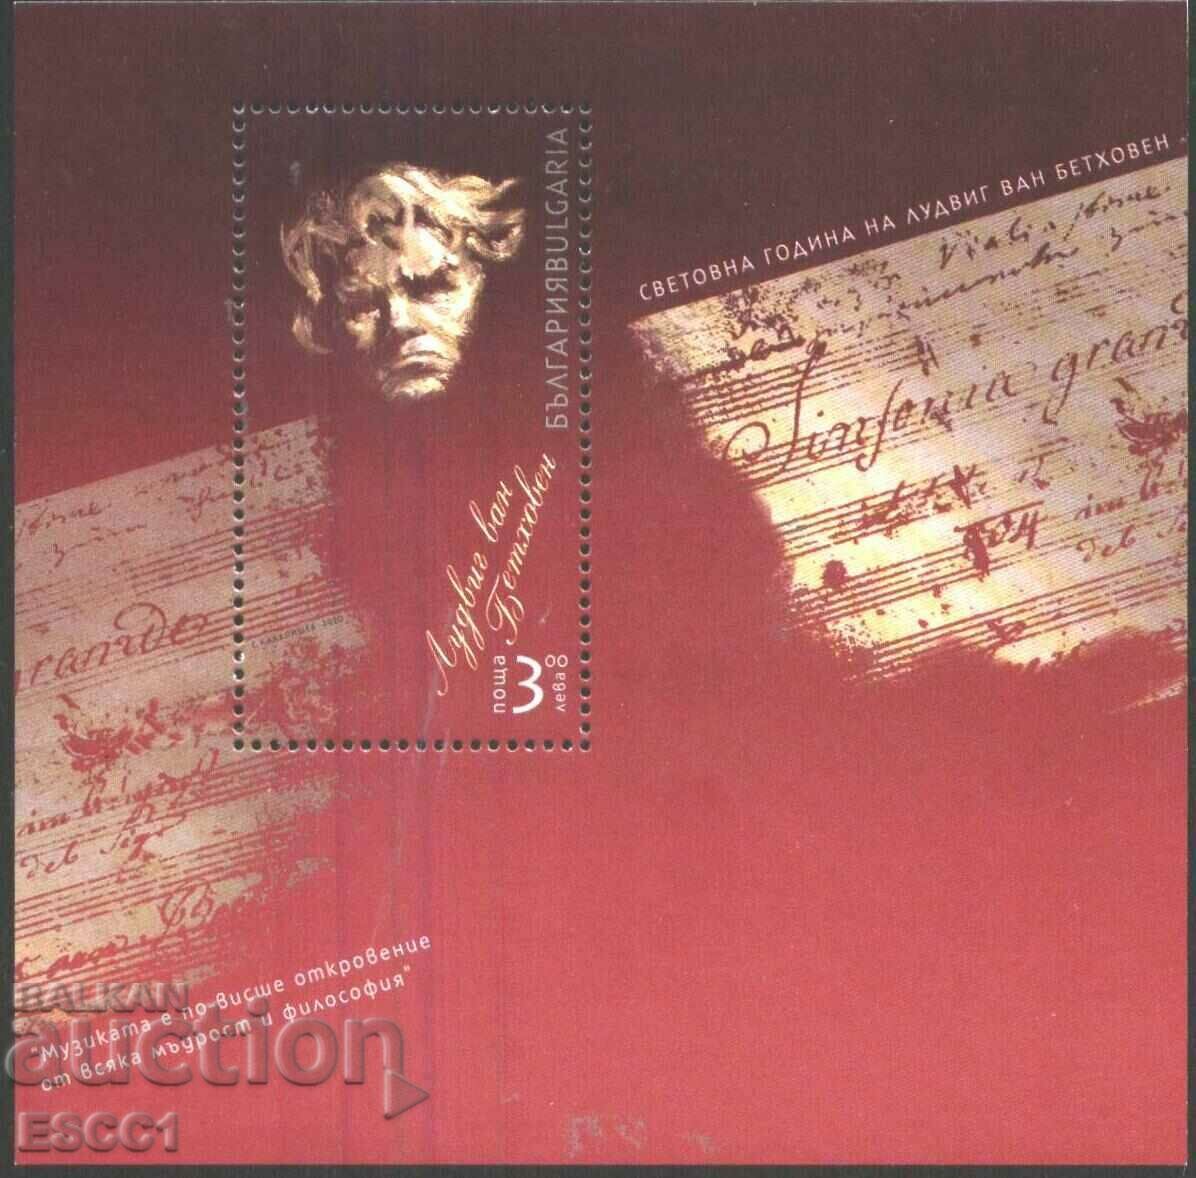 Pure block Music Beethoven 2020 από τη Βουλγαρία